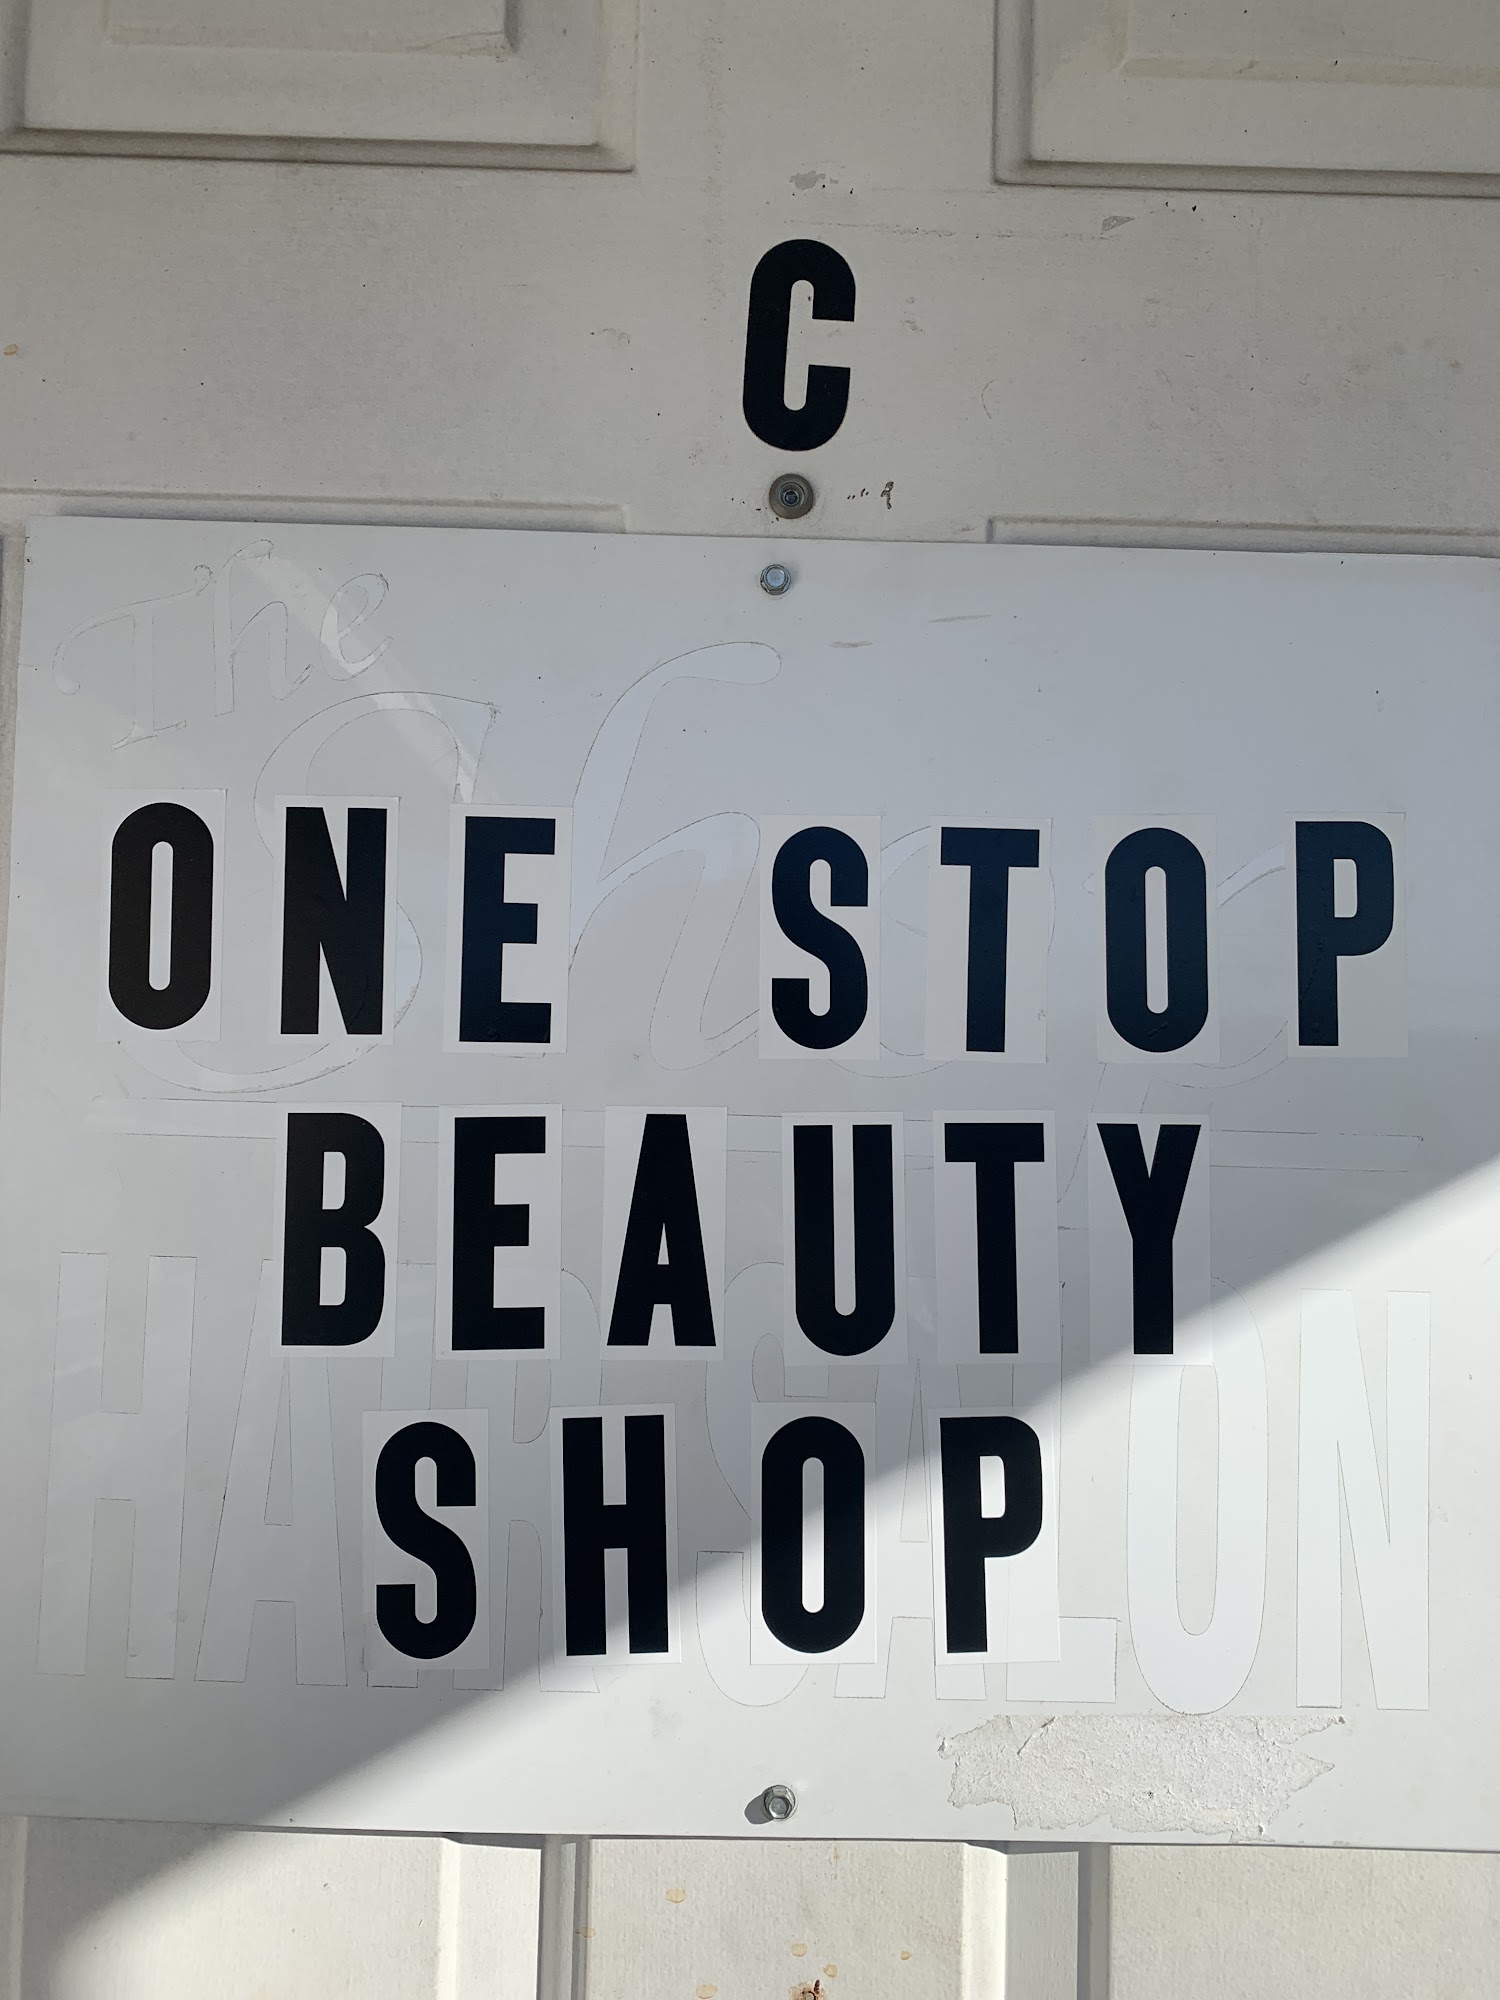 One stop beauty shop